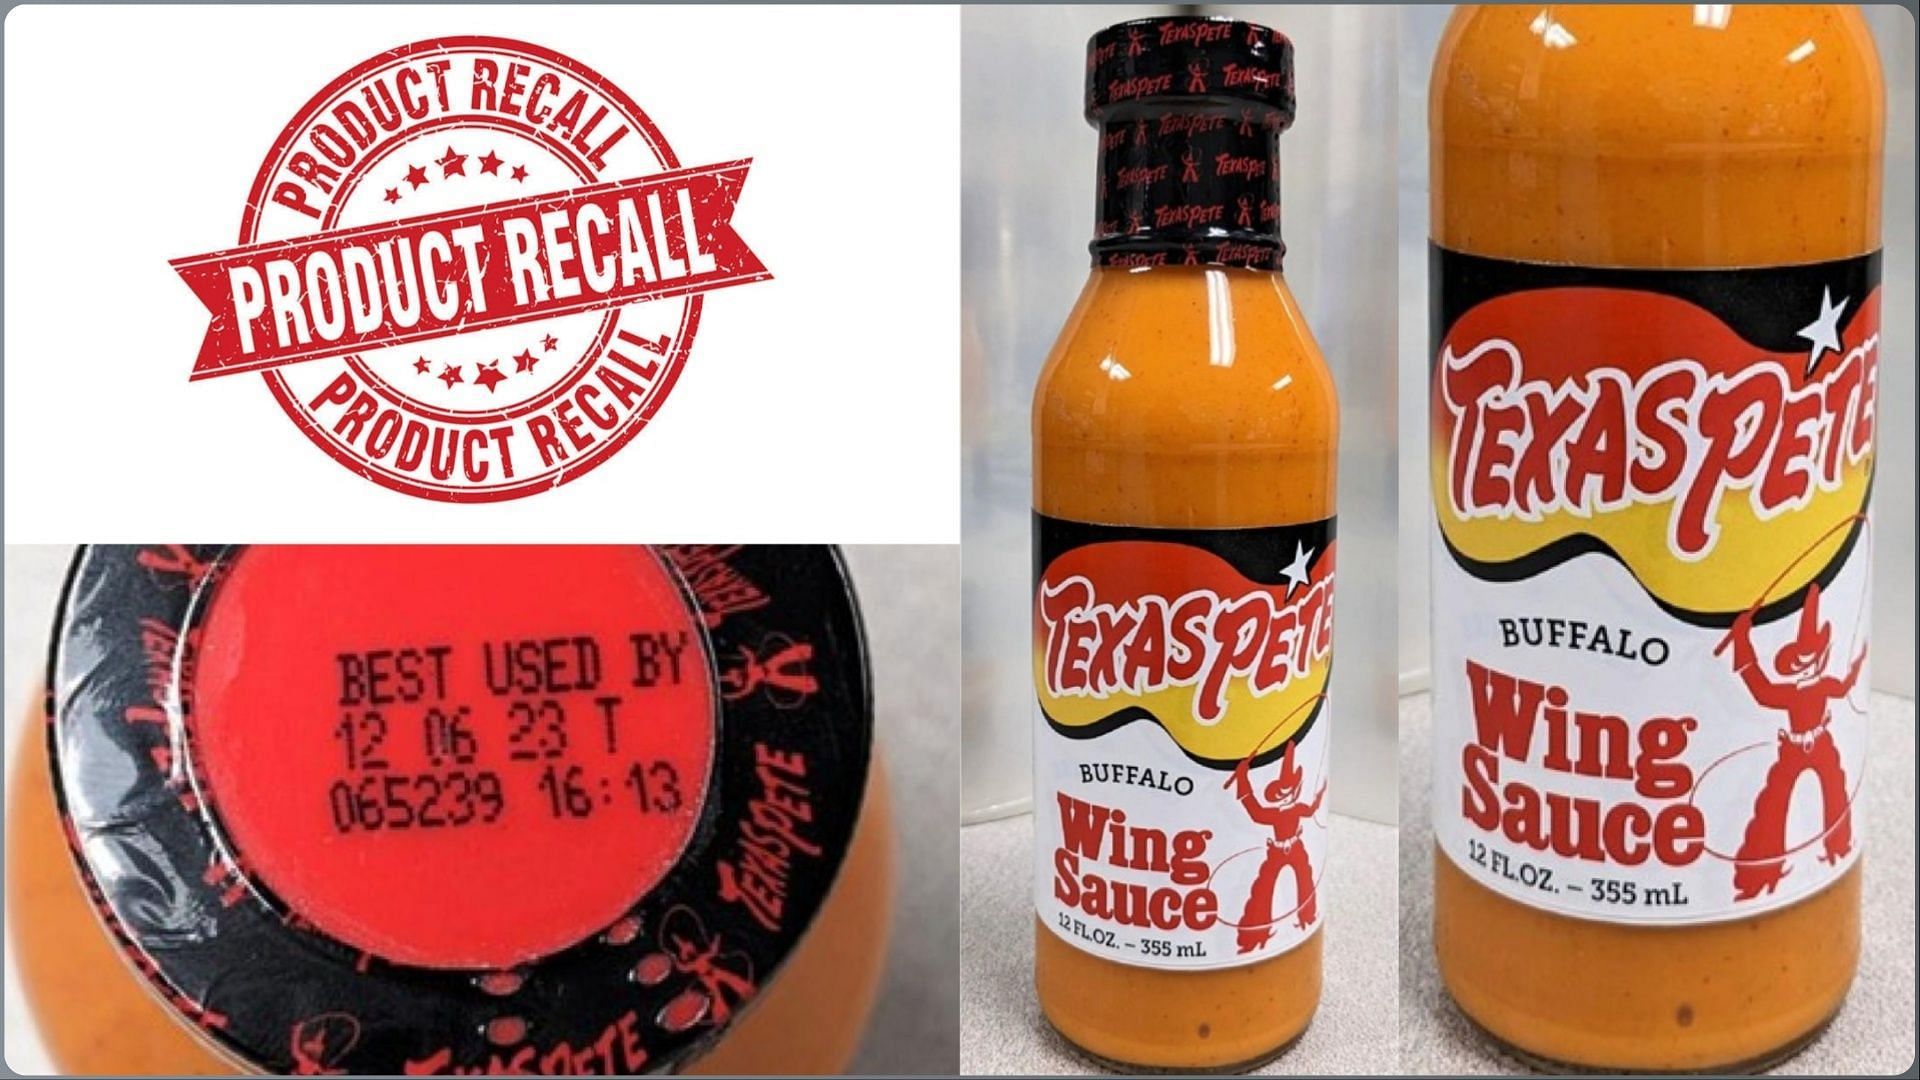 T.W. Garner Food Company recalls Texas Pete Buffalo Wing Sauce over undeclared soy allergen concerns (Image via FDA)